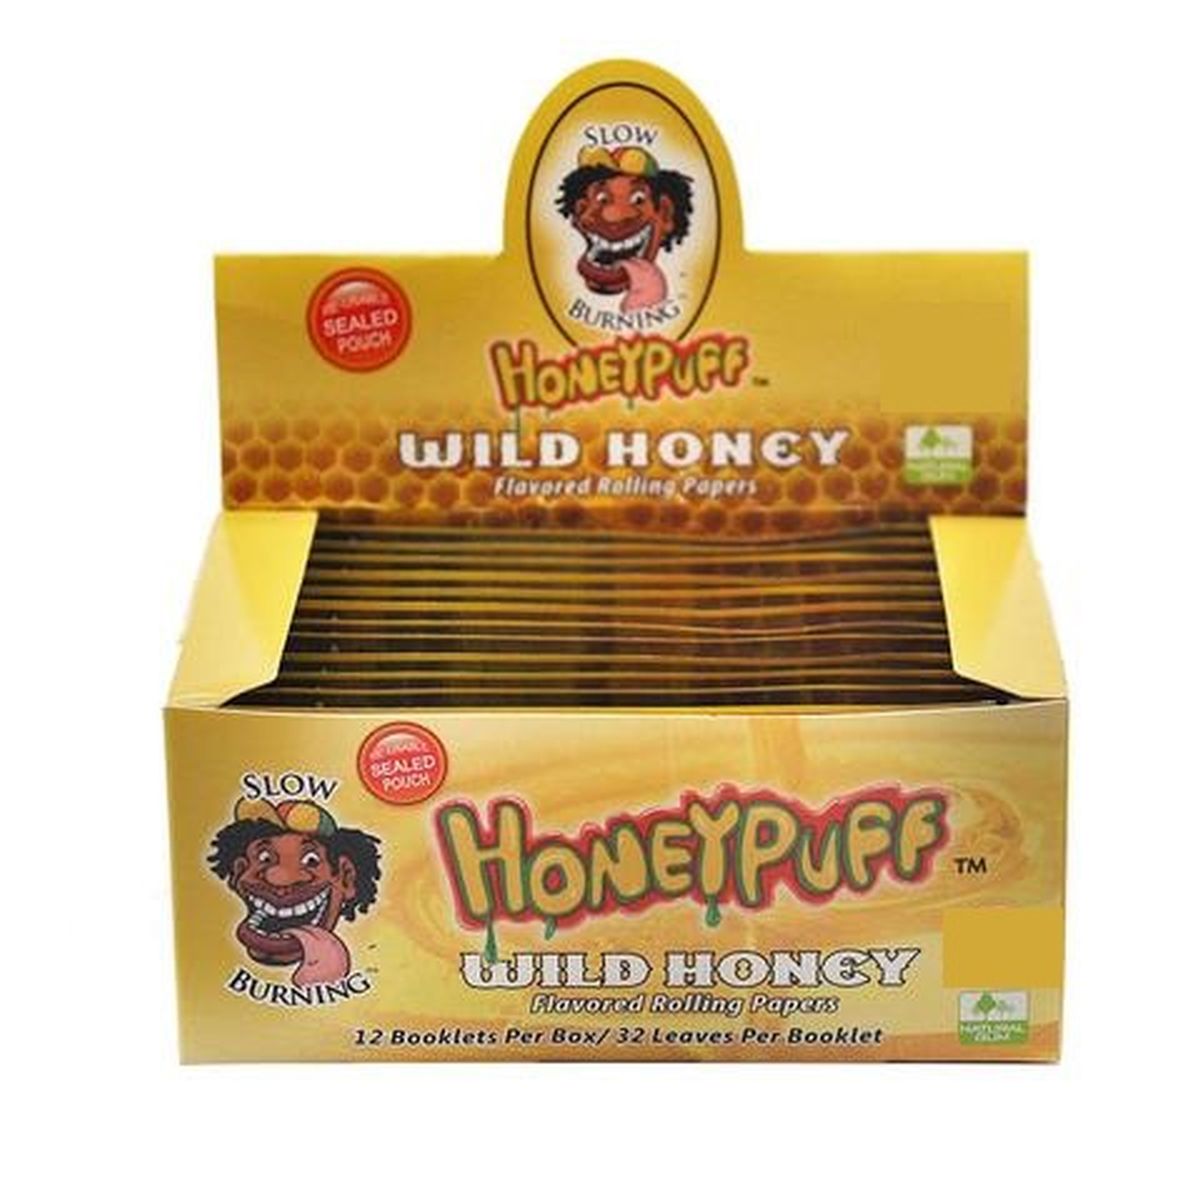 Honeypuff Drehpapier Honeypuff KS Wild Honey-Aroma 32 Blatt bei www.Tabakring.de kaufen